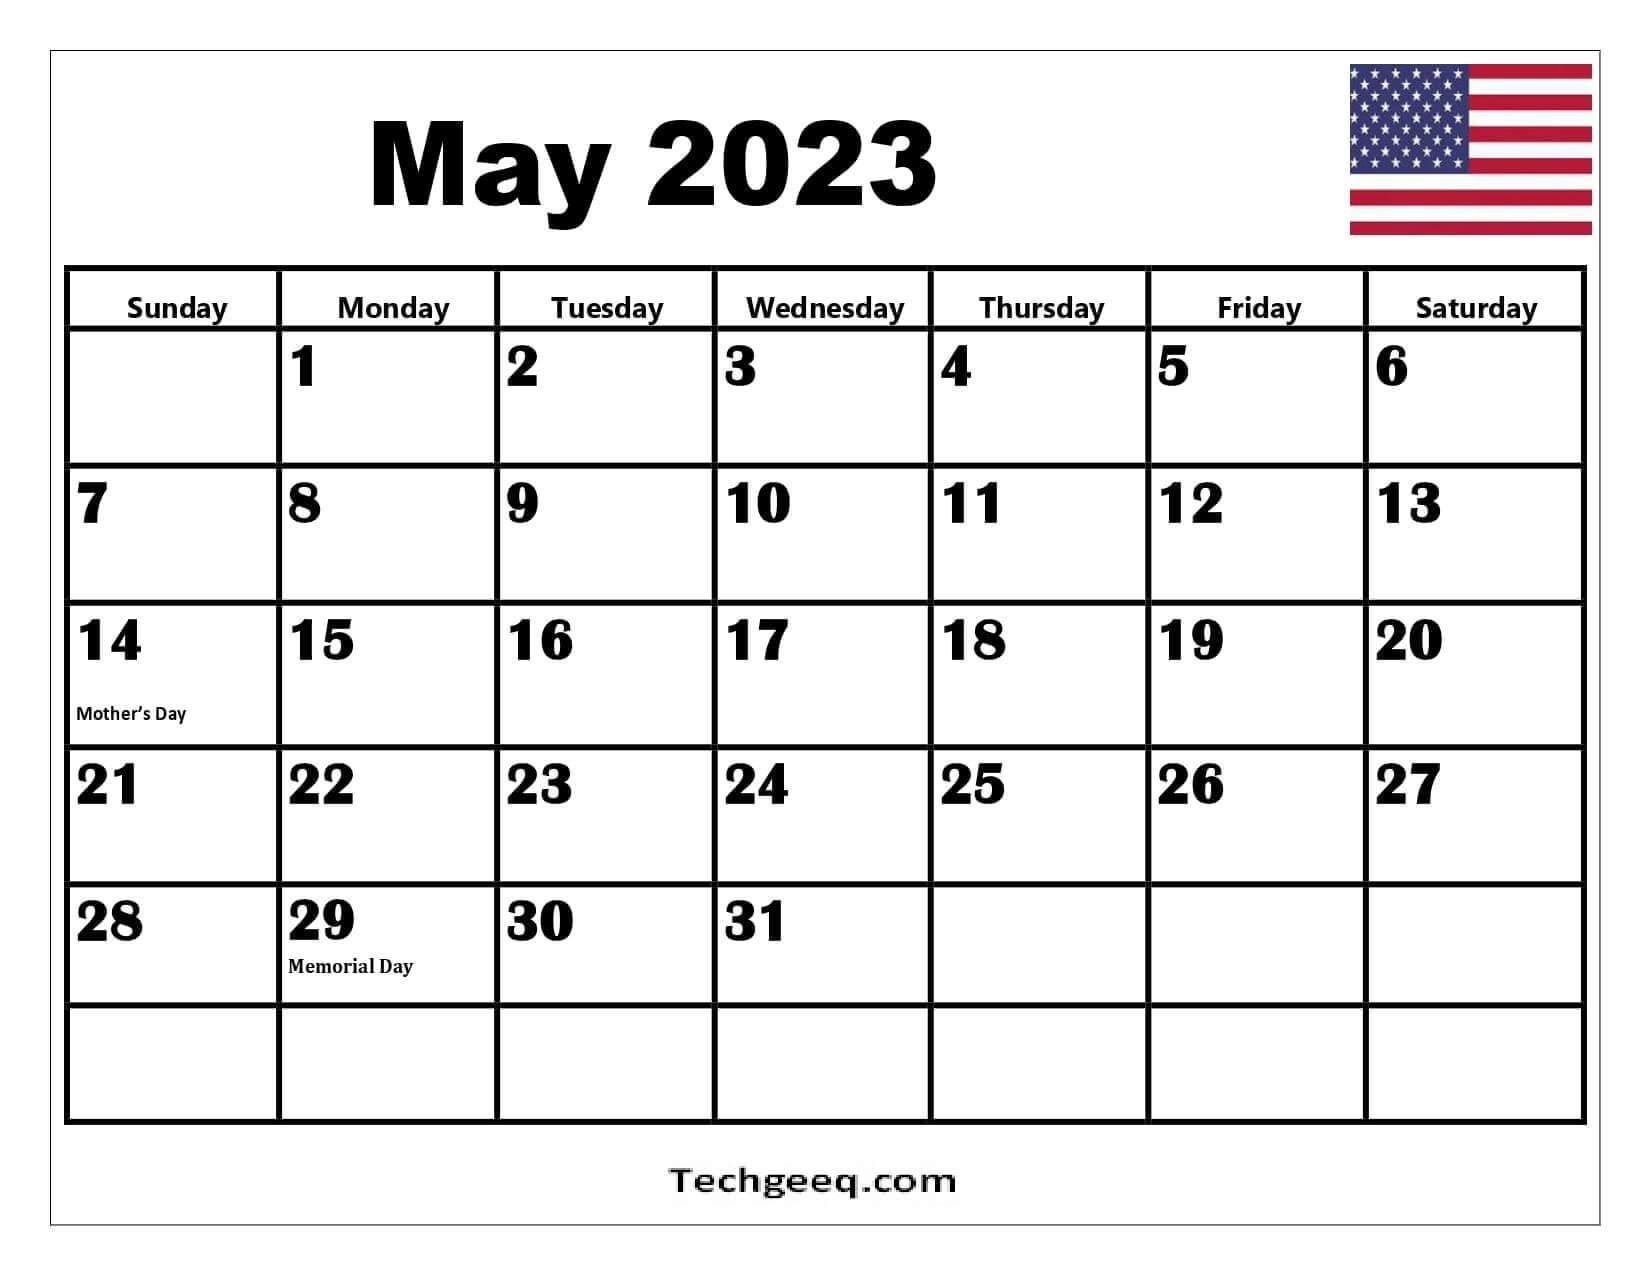 May 2023 Calendar with USA Holidays